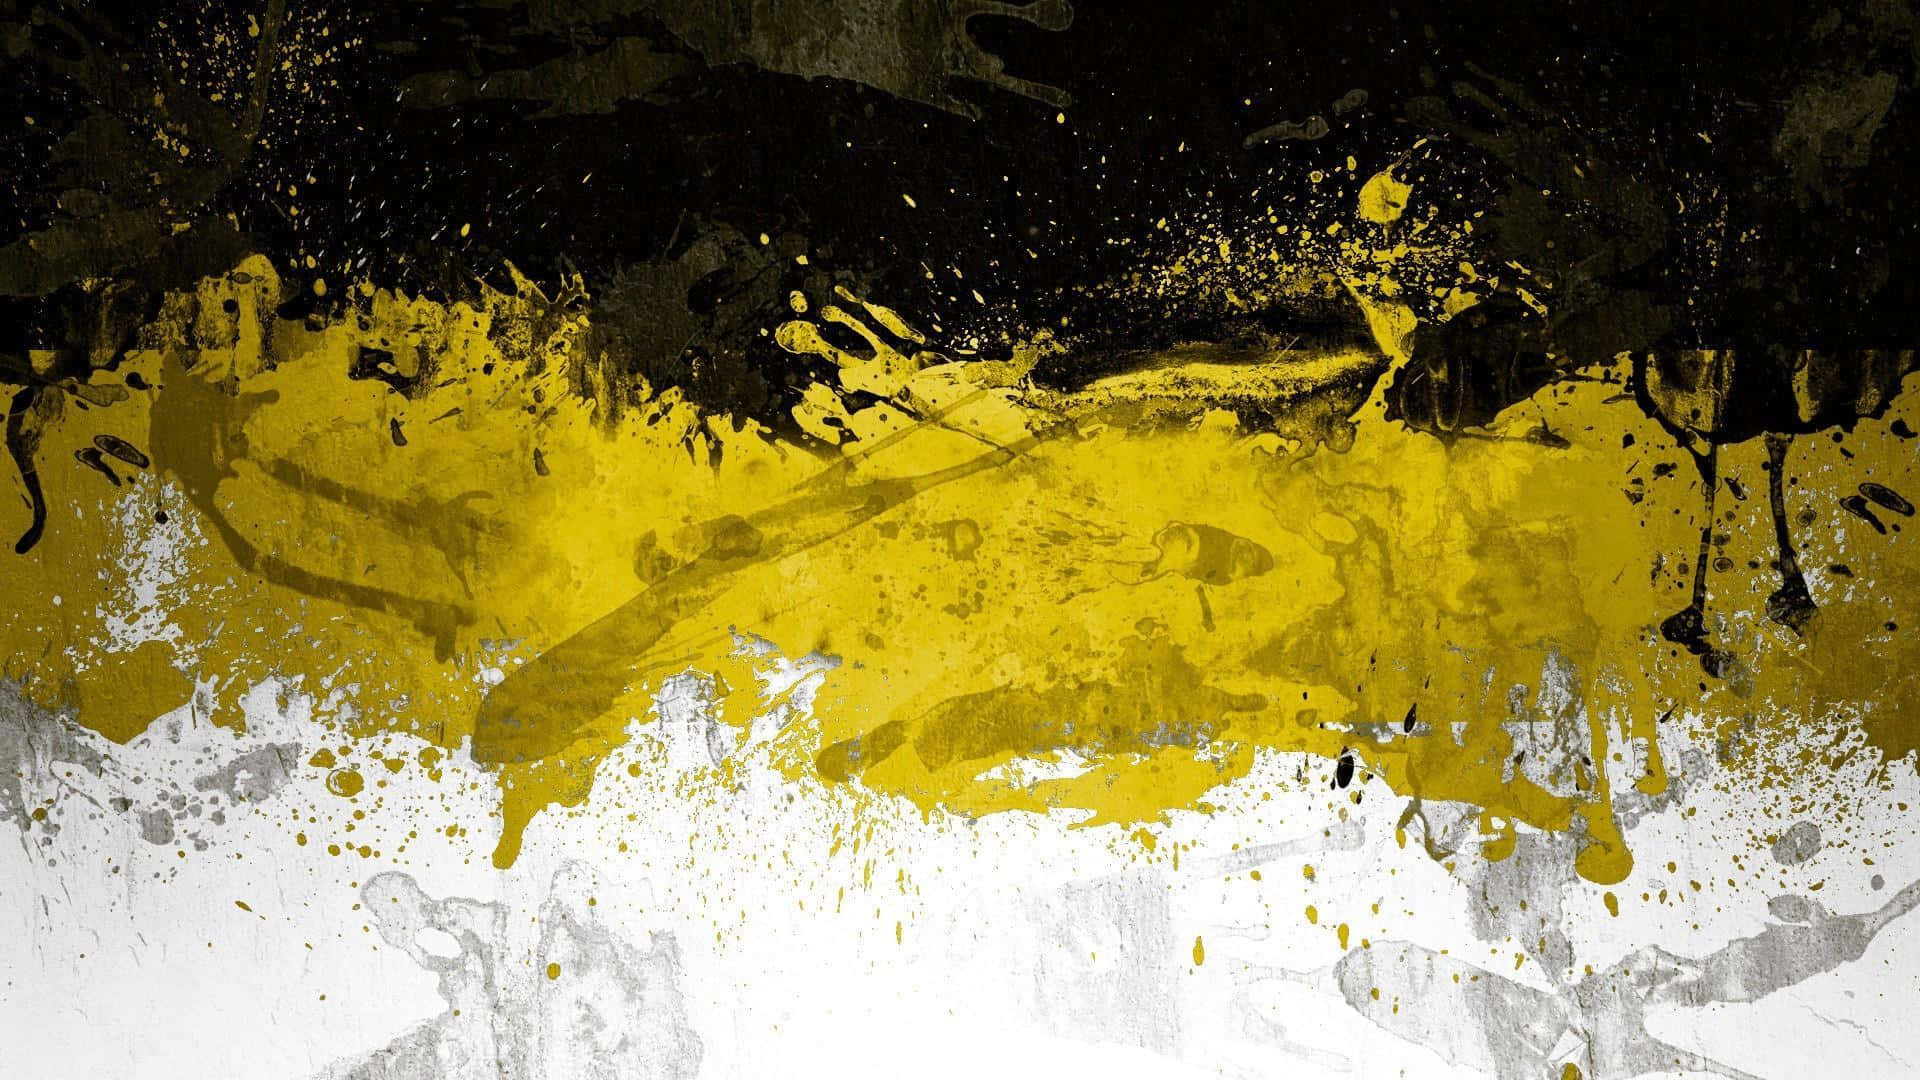 Black and Yellow Paint Splatter